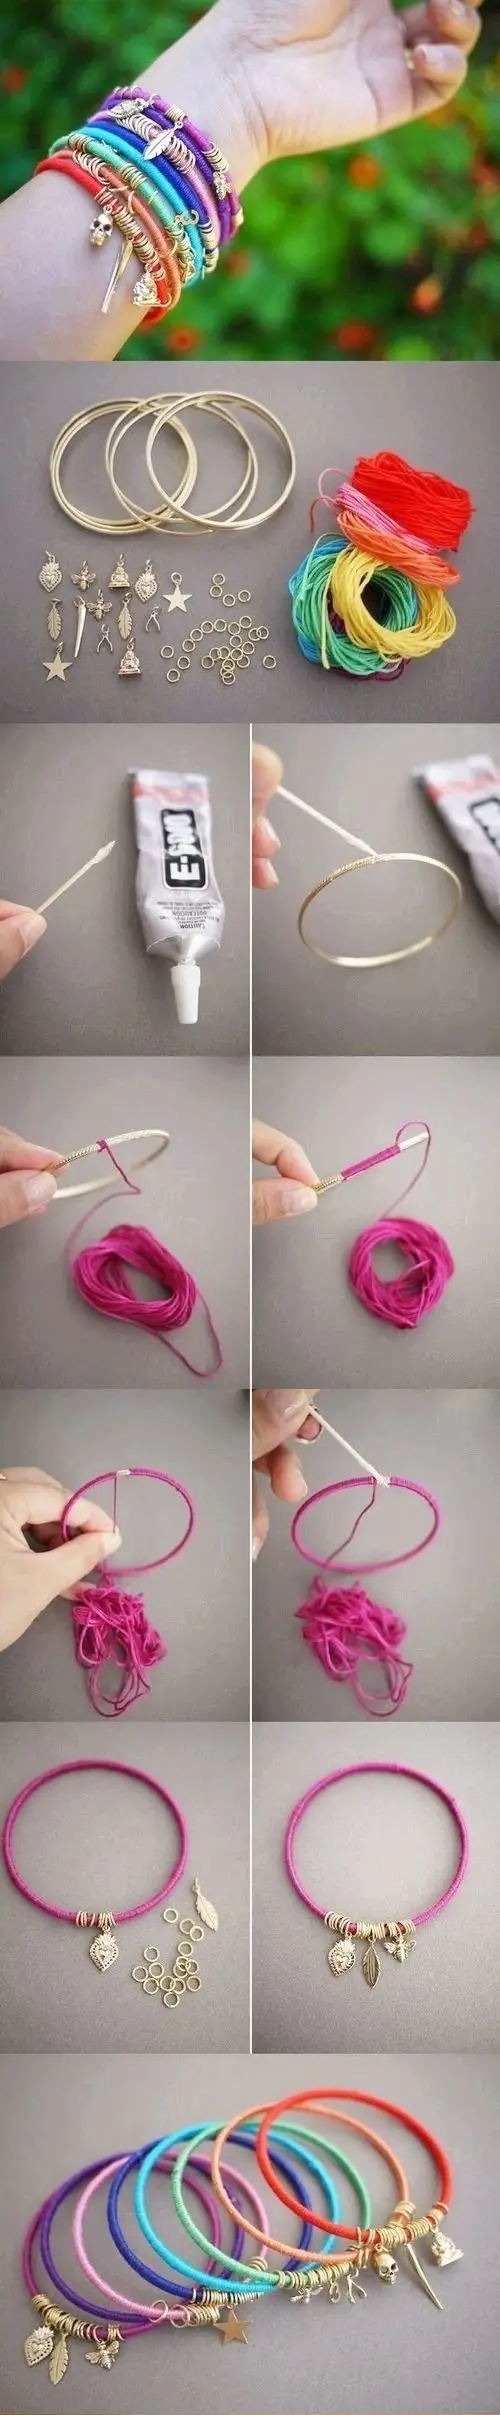 7 Easy DIY Bracelet Ideas: Learn How to Make Bracelets at Home